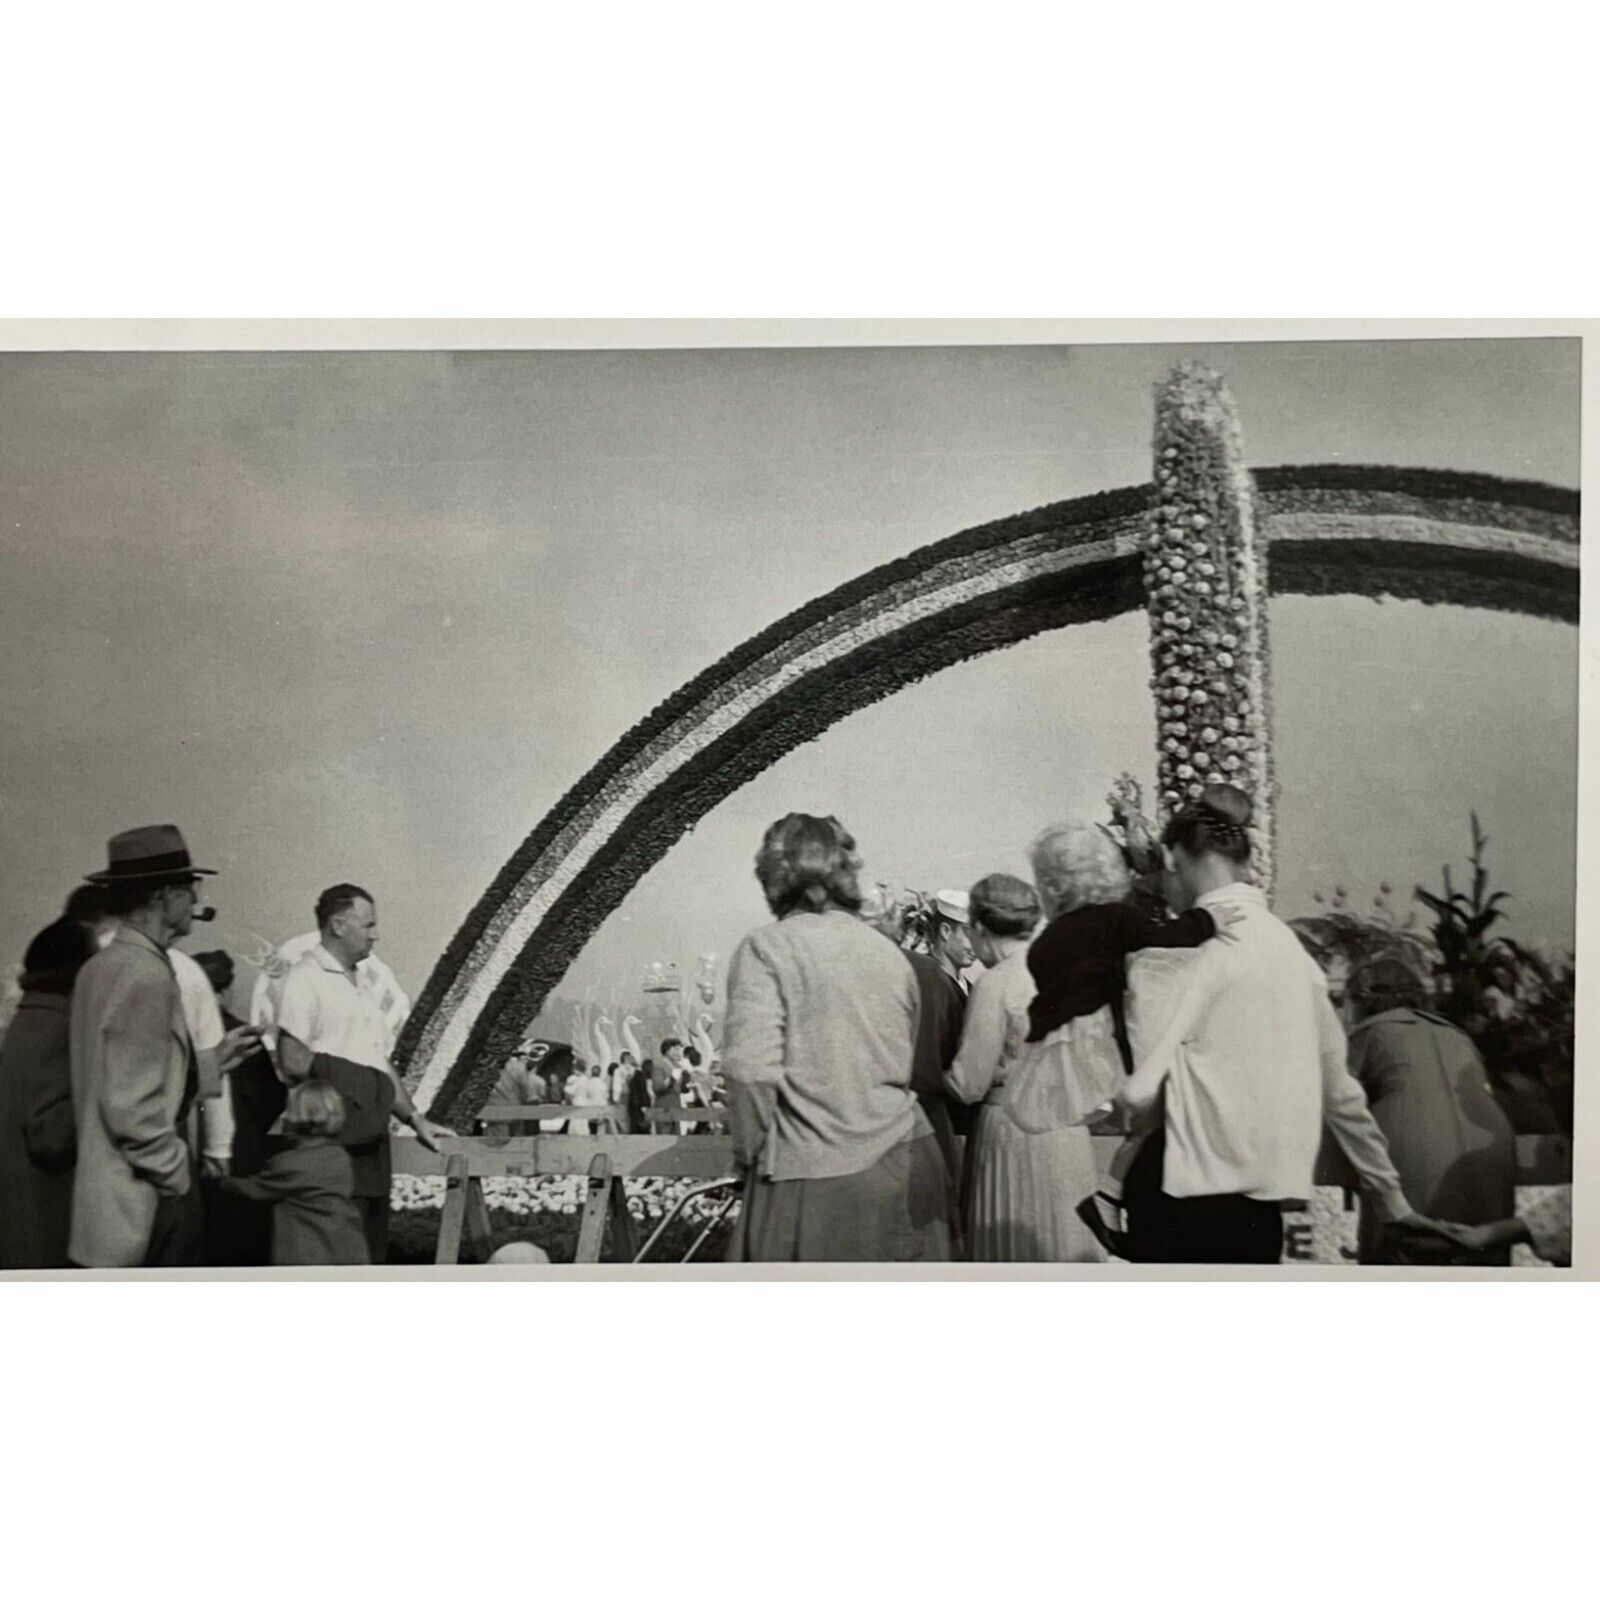 Tournament of Roses Parade Floats Found Photo 1958 Vintage Snapshot Pasadena CA